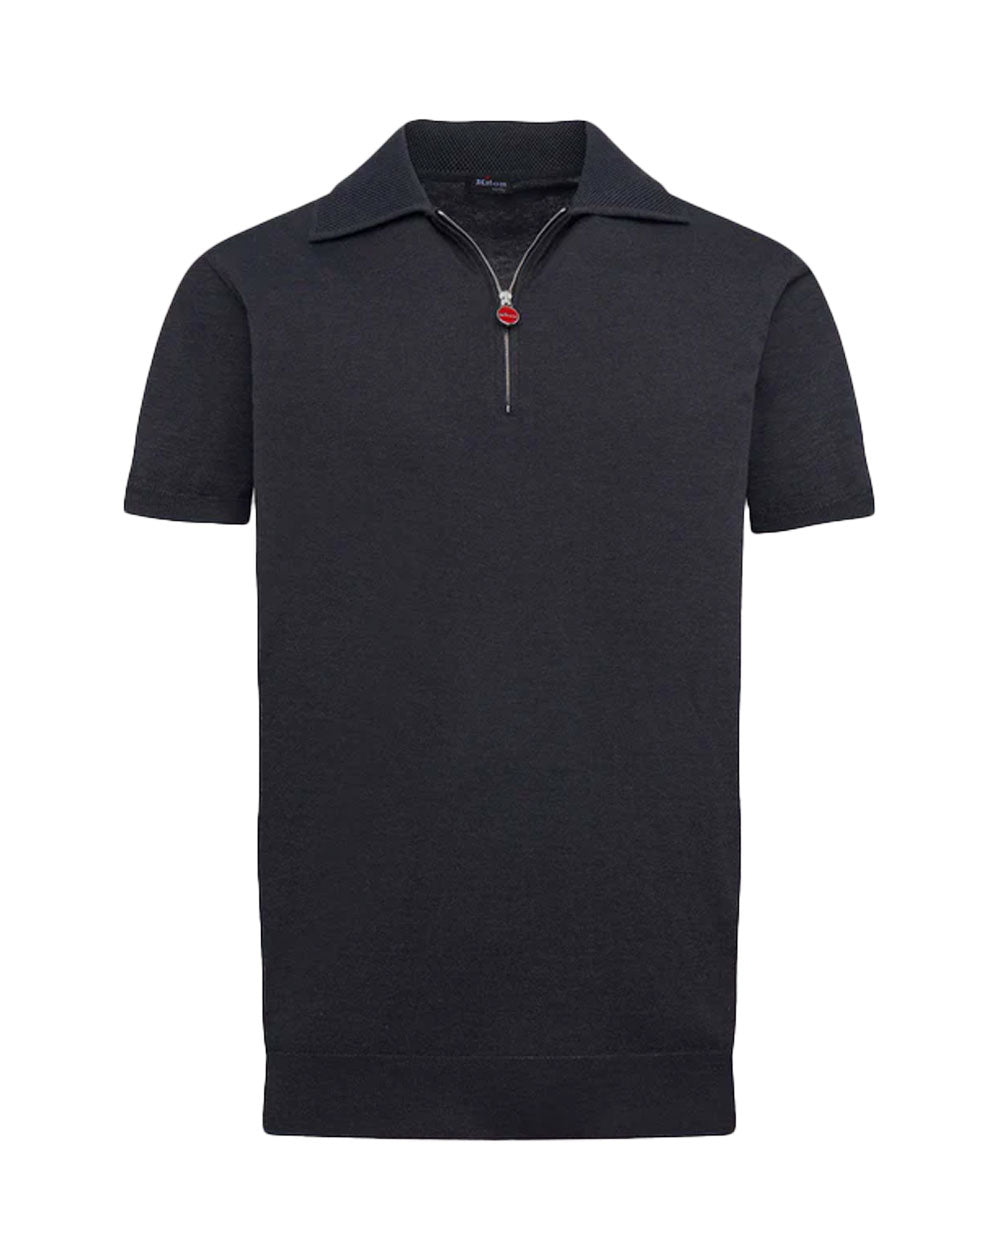 Black Zip Short Sleeve Polo